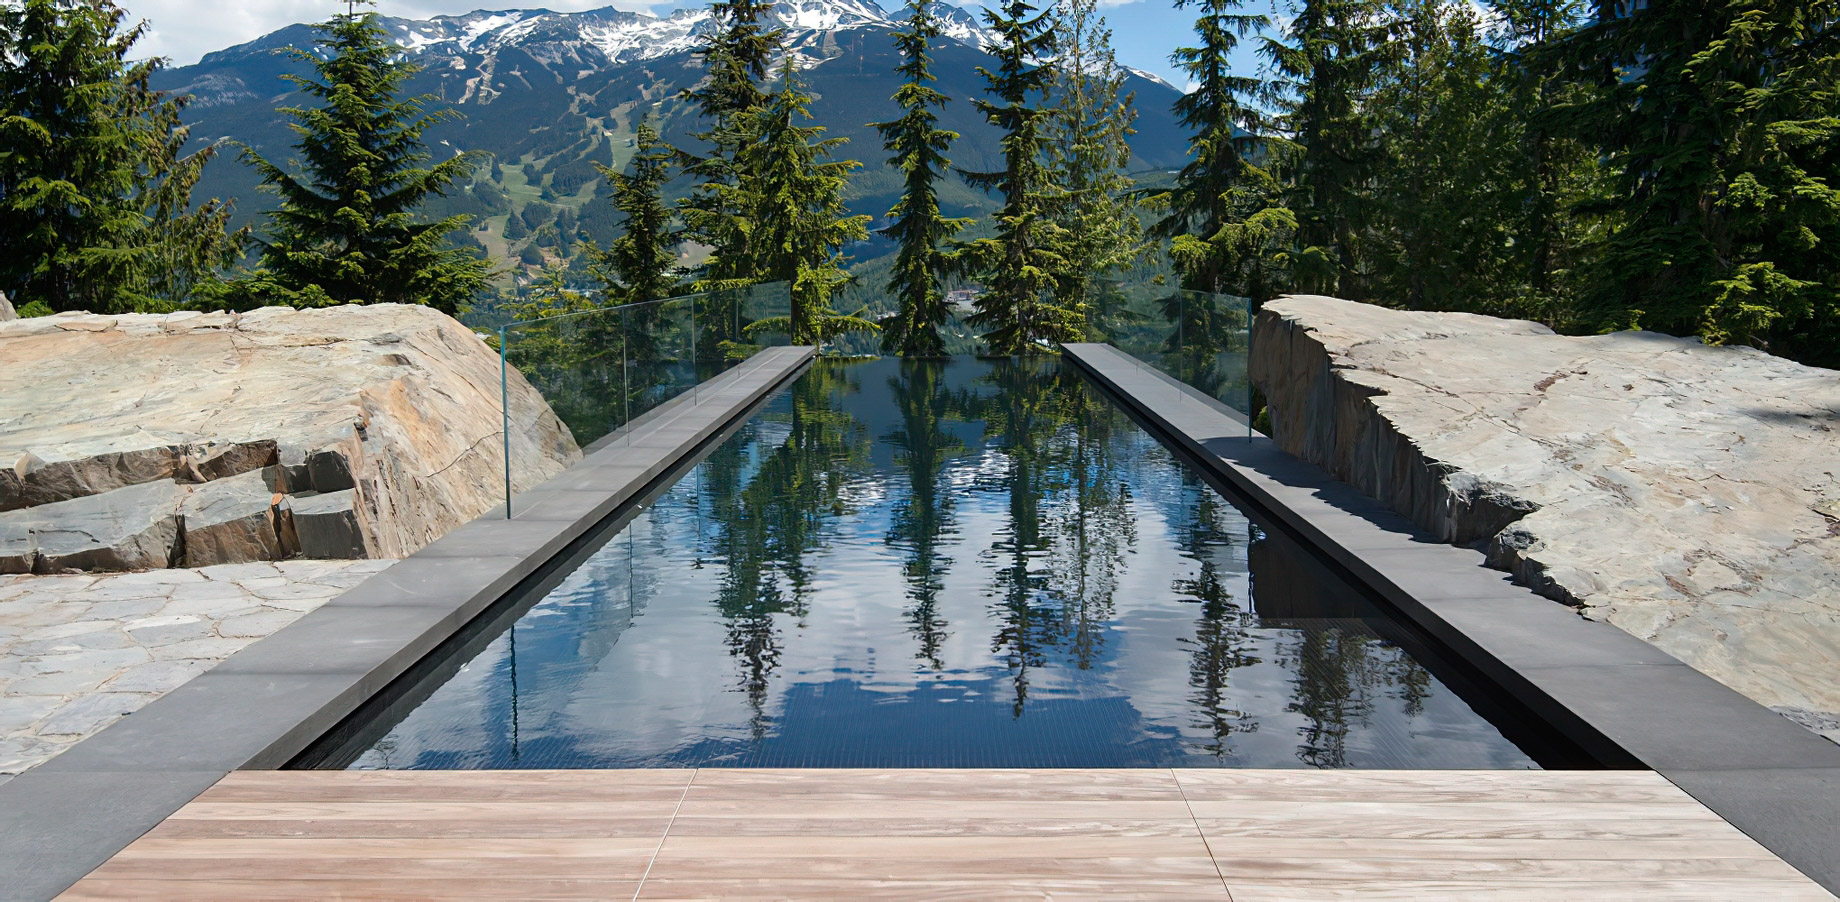 Amanderu Estate Luxury Ski Chalet - Stonebridge Dr, Whistler, BC, Canada